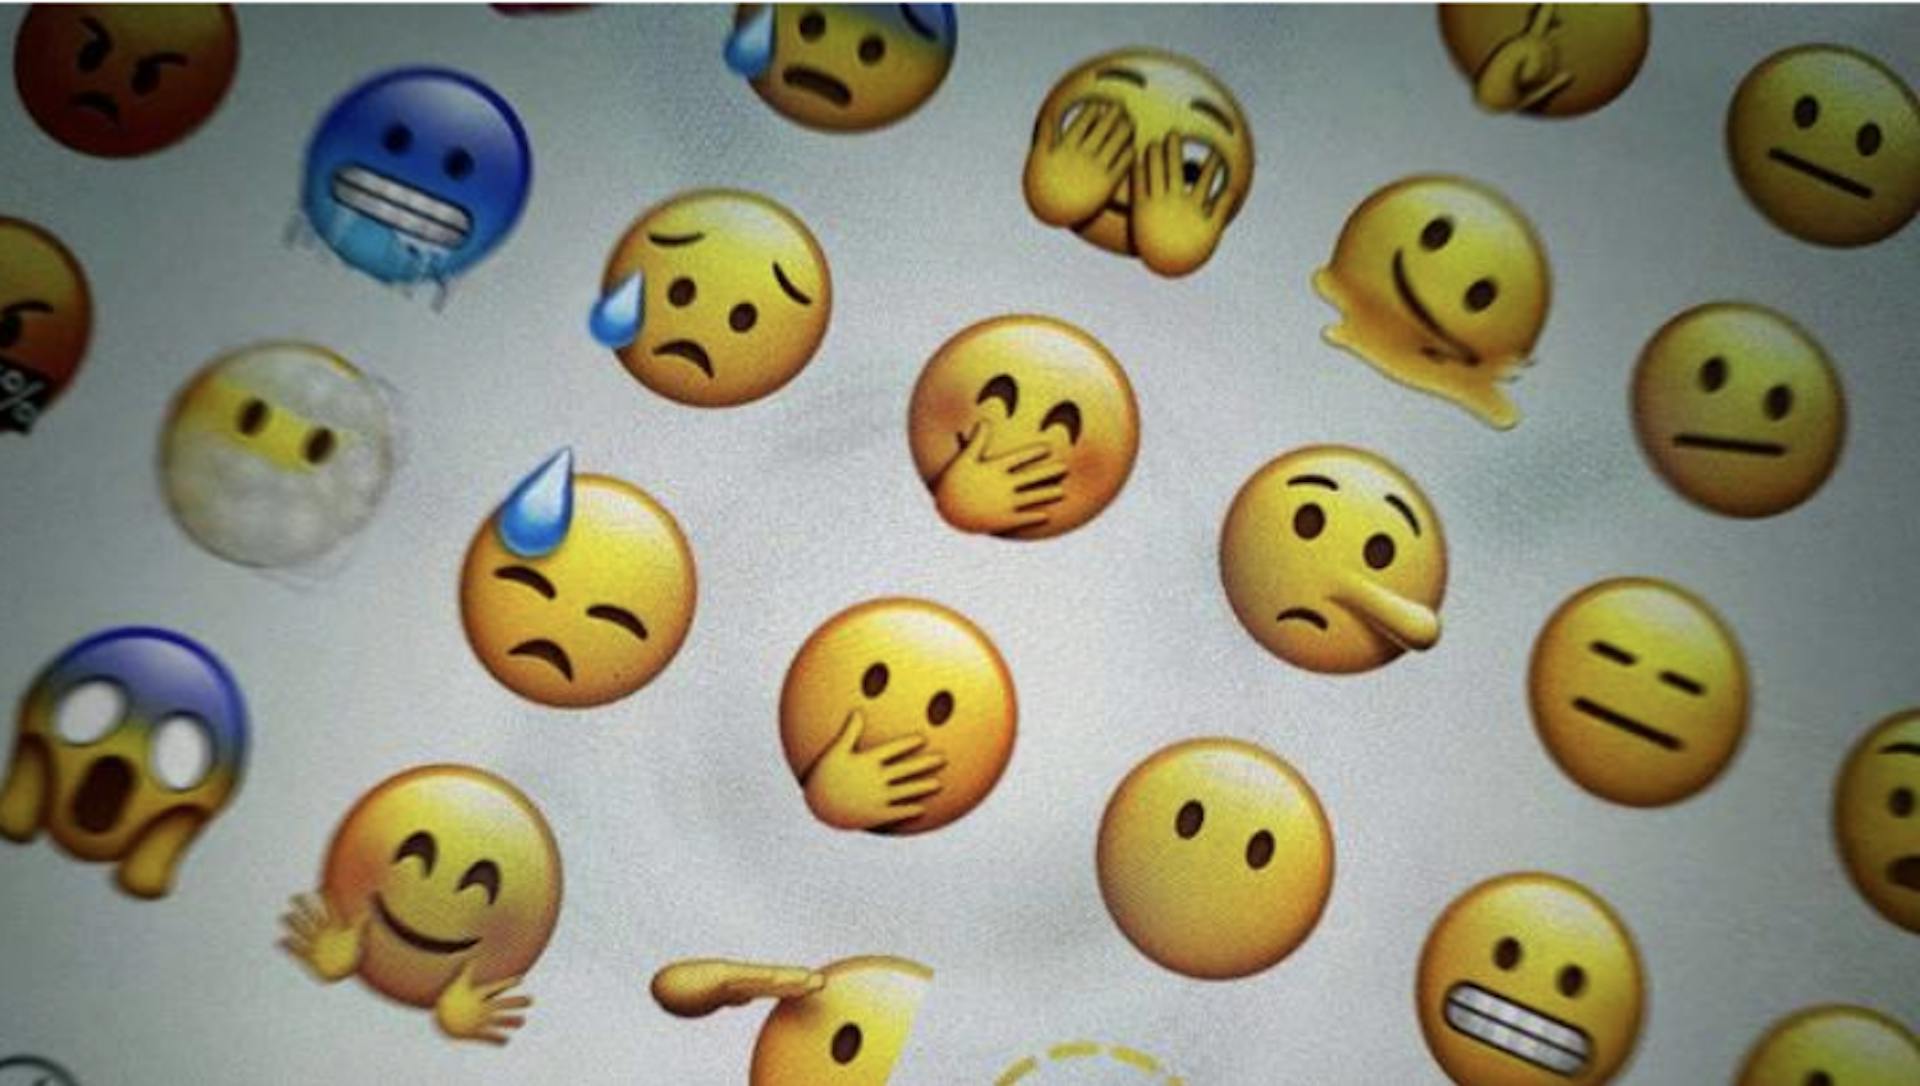 L'escroc a envoyé un ensemble de 25 emojis NFT, au lieu d'œuvres d'art / Source : vm.ru